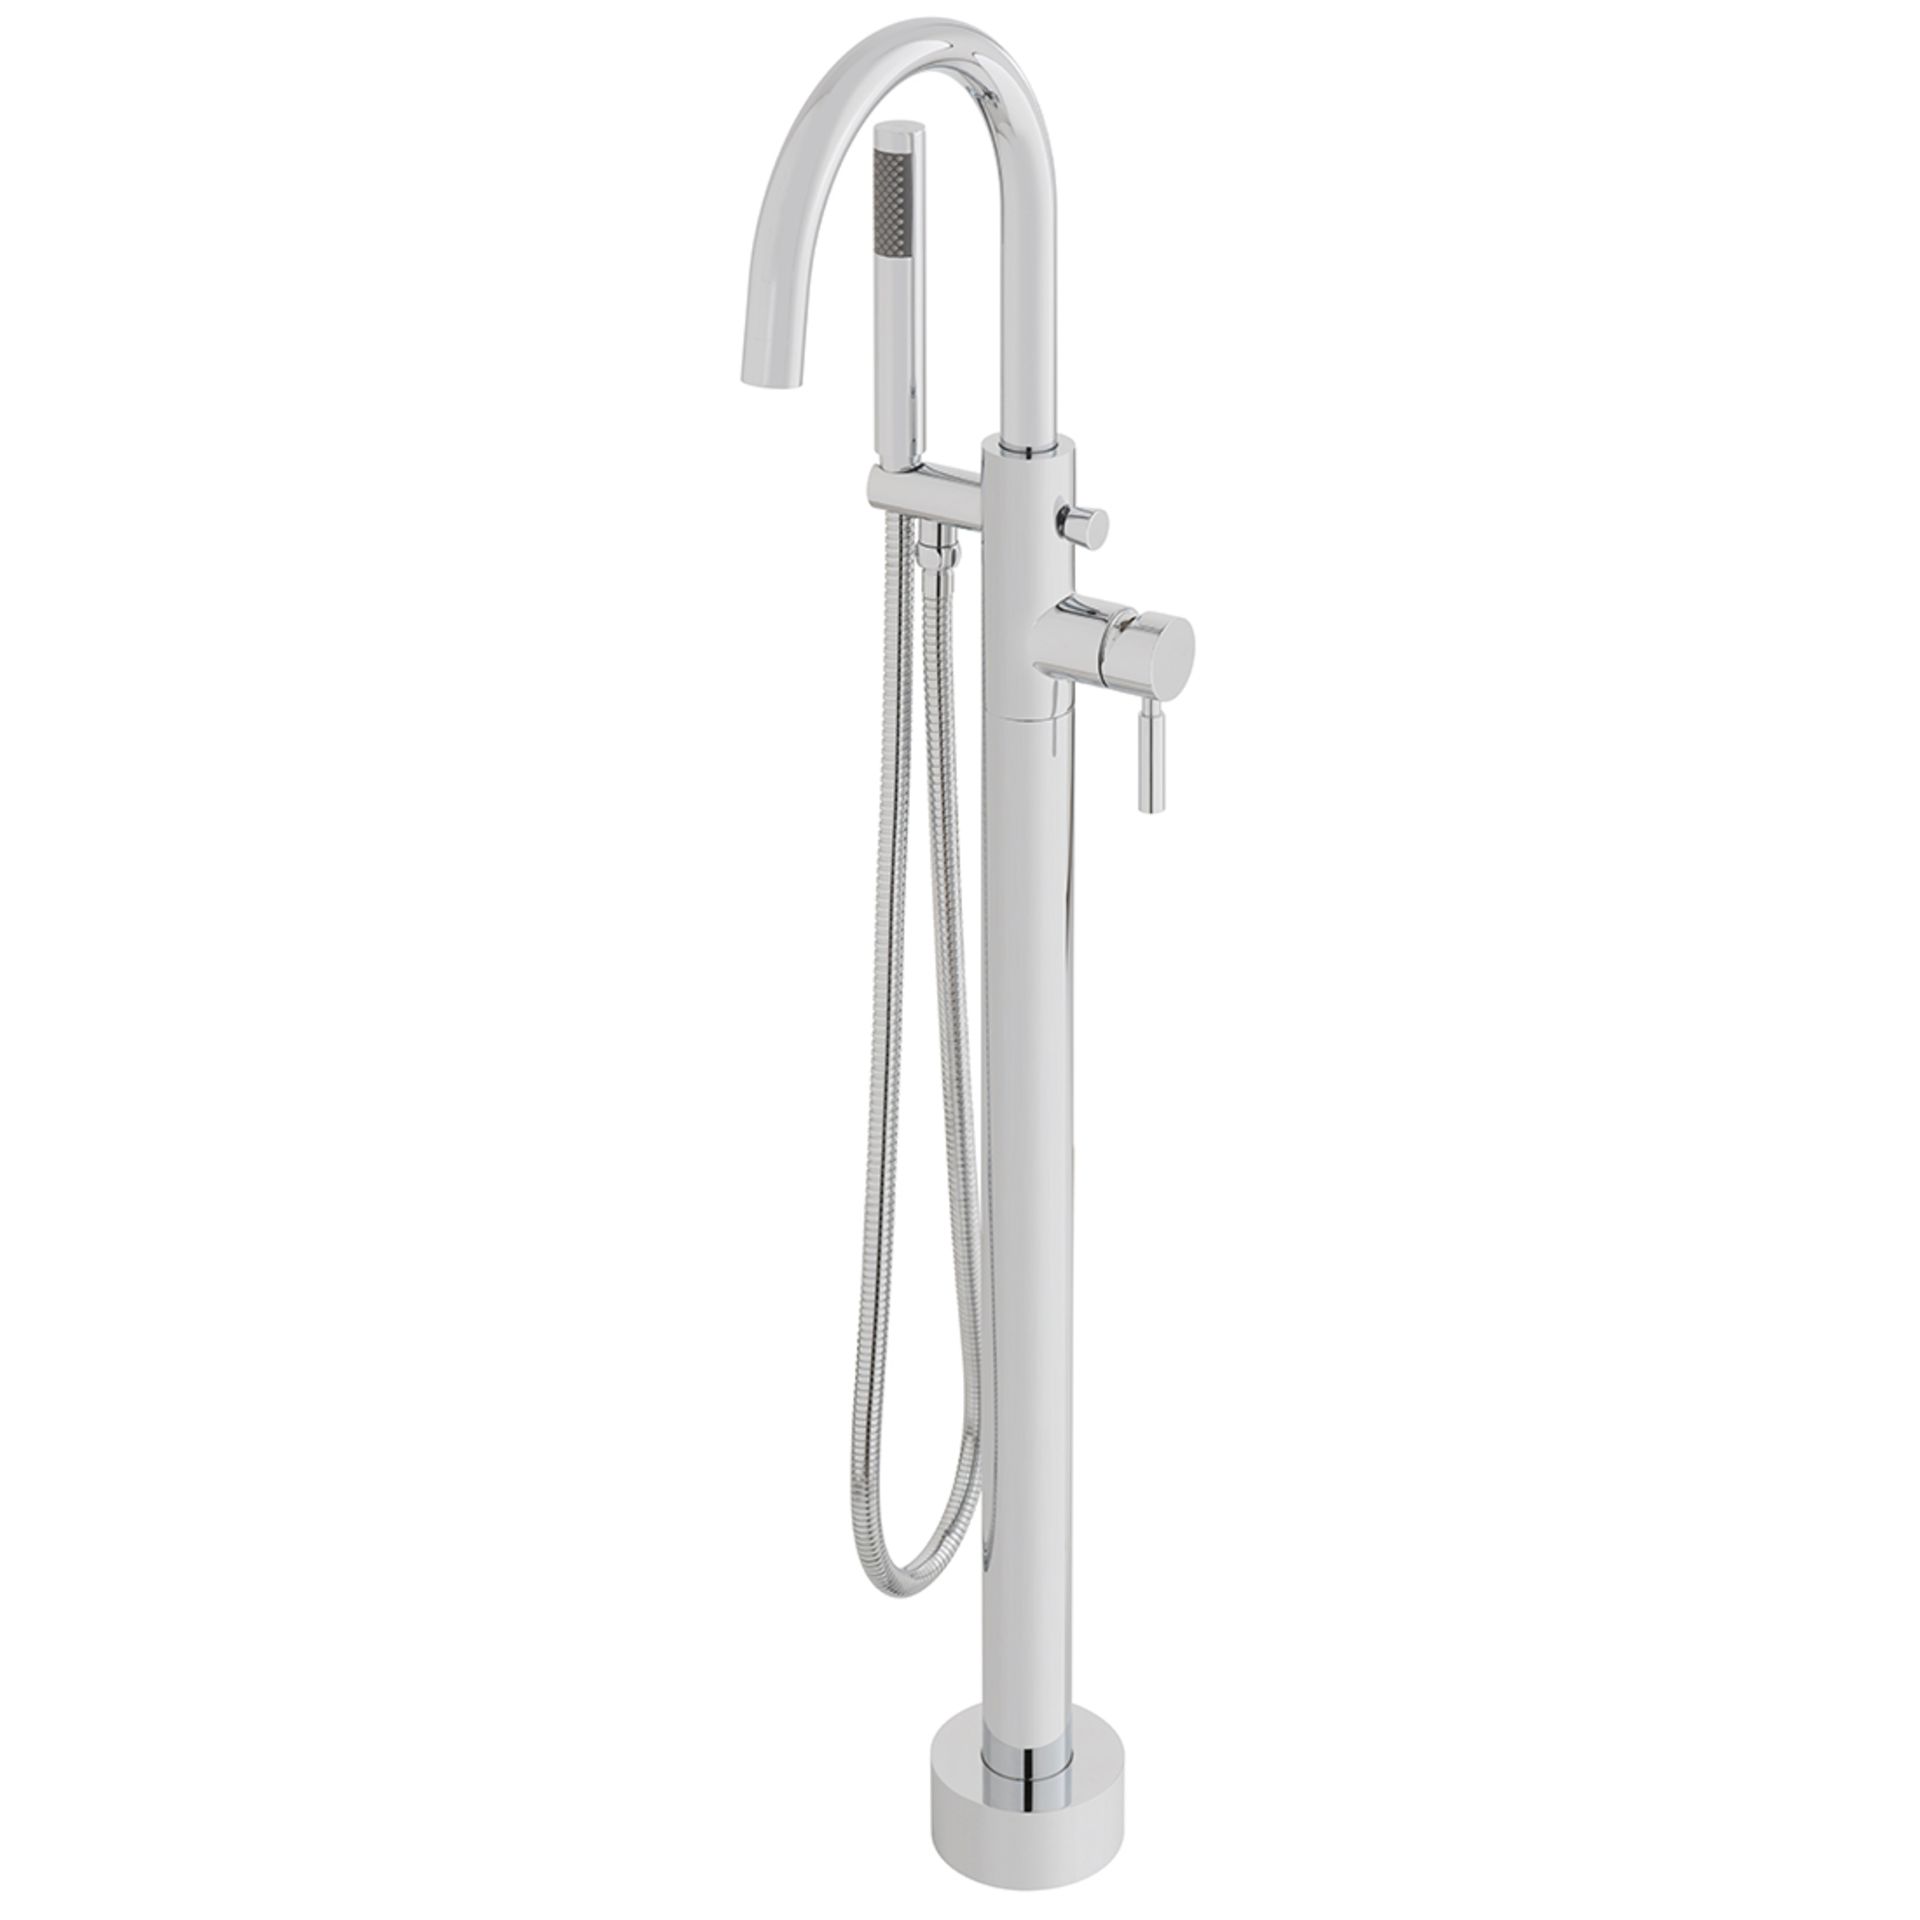 ZZ-VAD-ORI-233-CP - Vado Origins Floor Standing Bath Shower Mixer Tap with Shower Kit - Chrome....